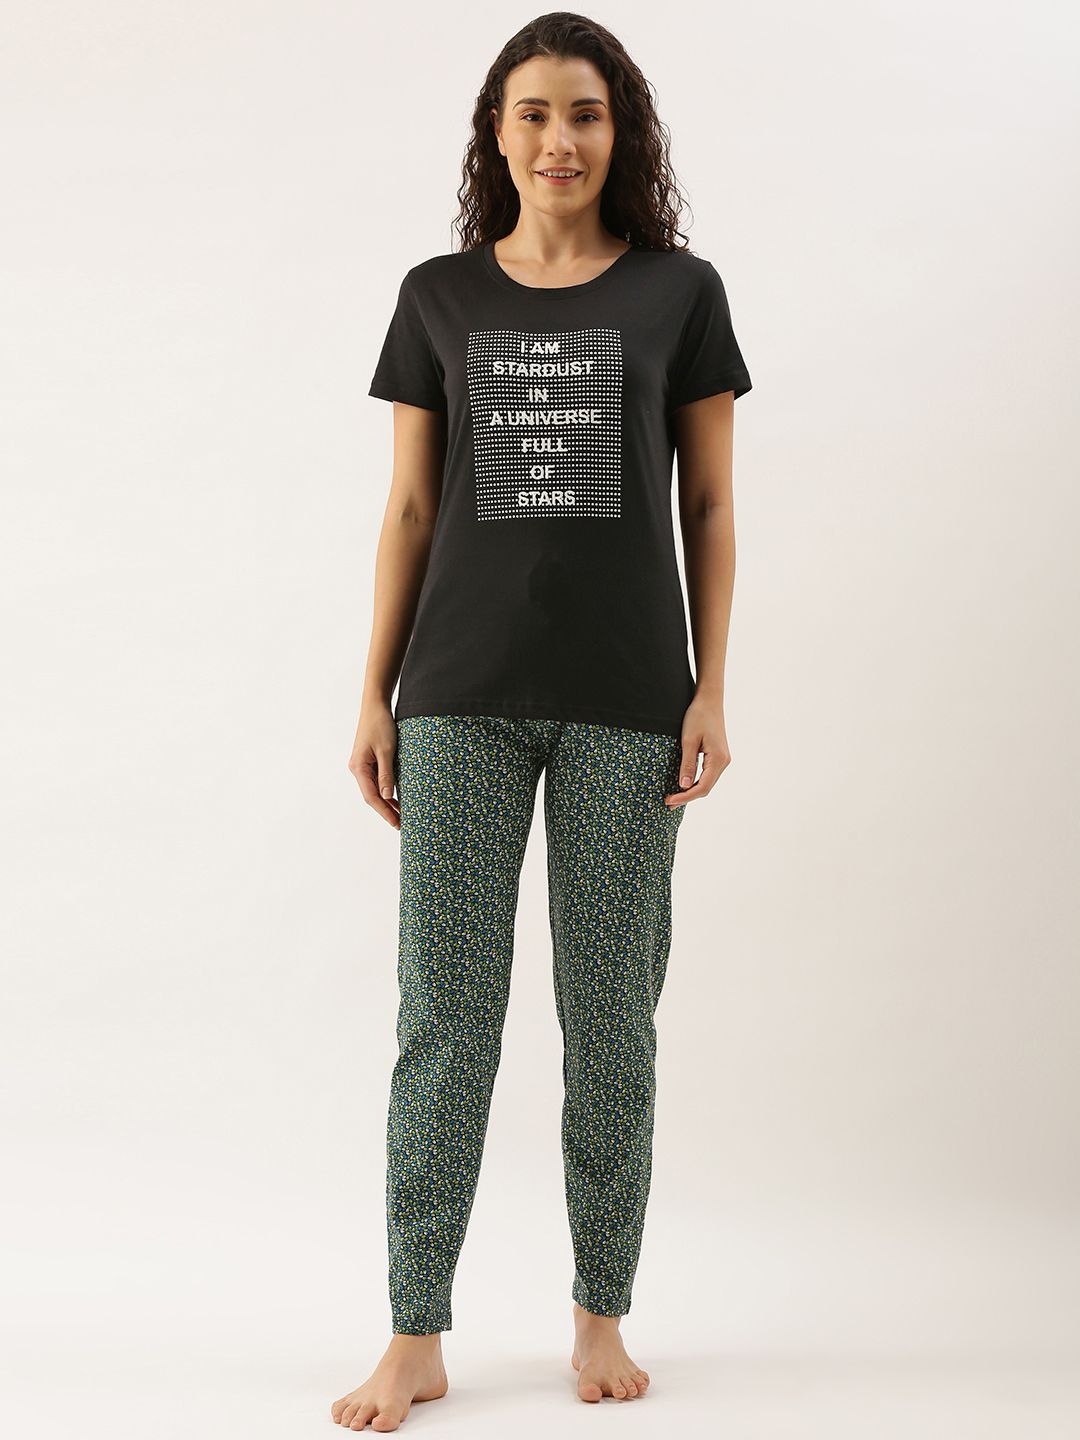 Kryptic Women Black & Green Pure Cotton Typography Printed Pyjama Set Price in India